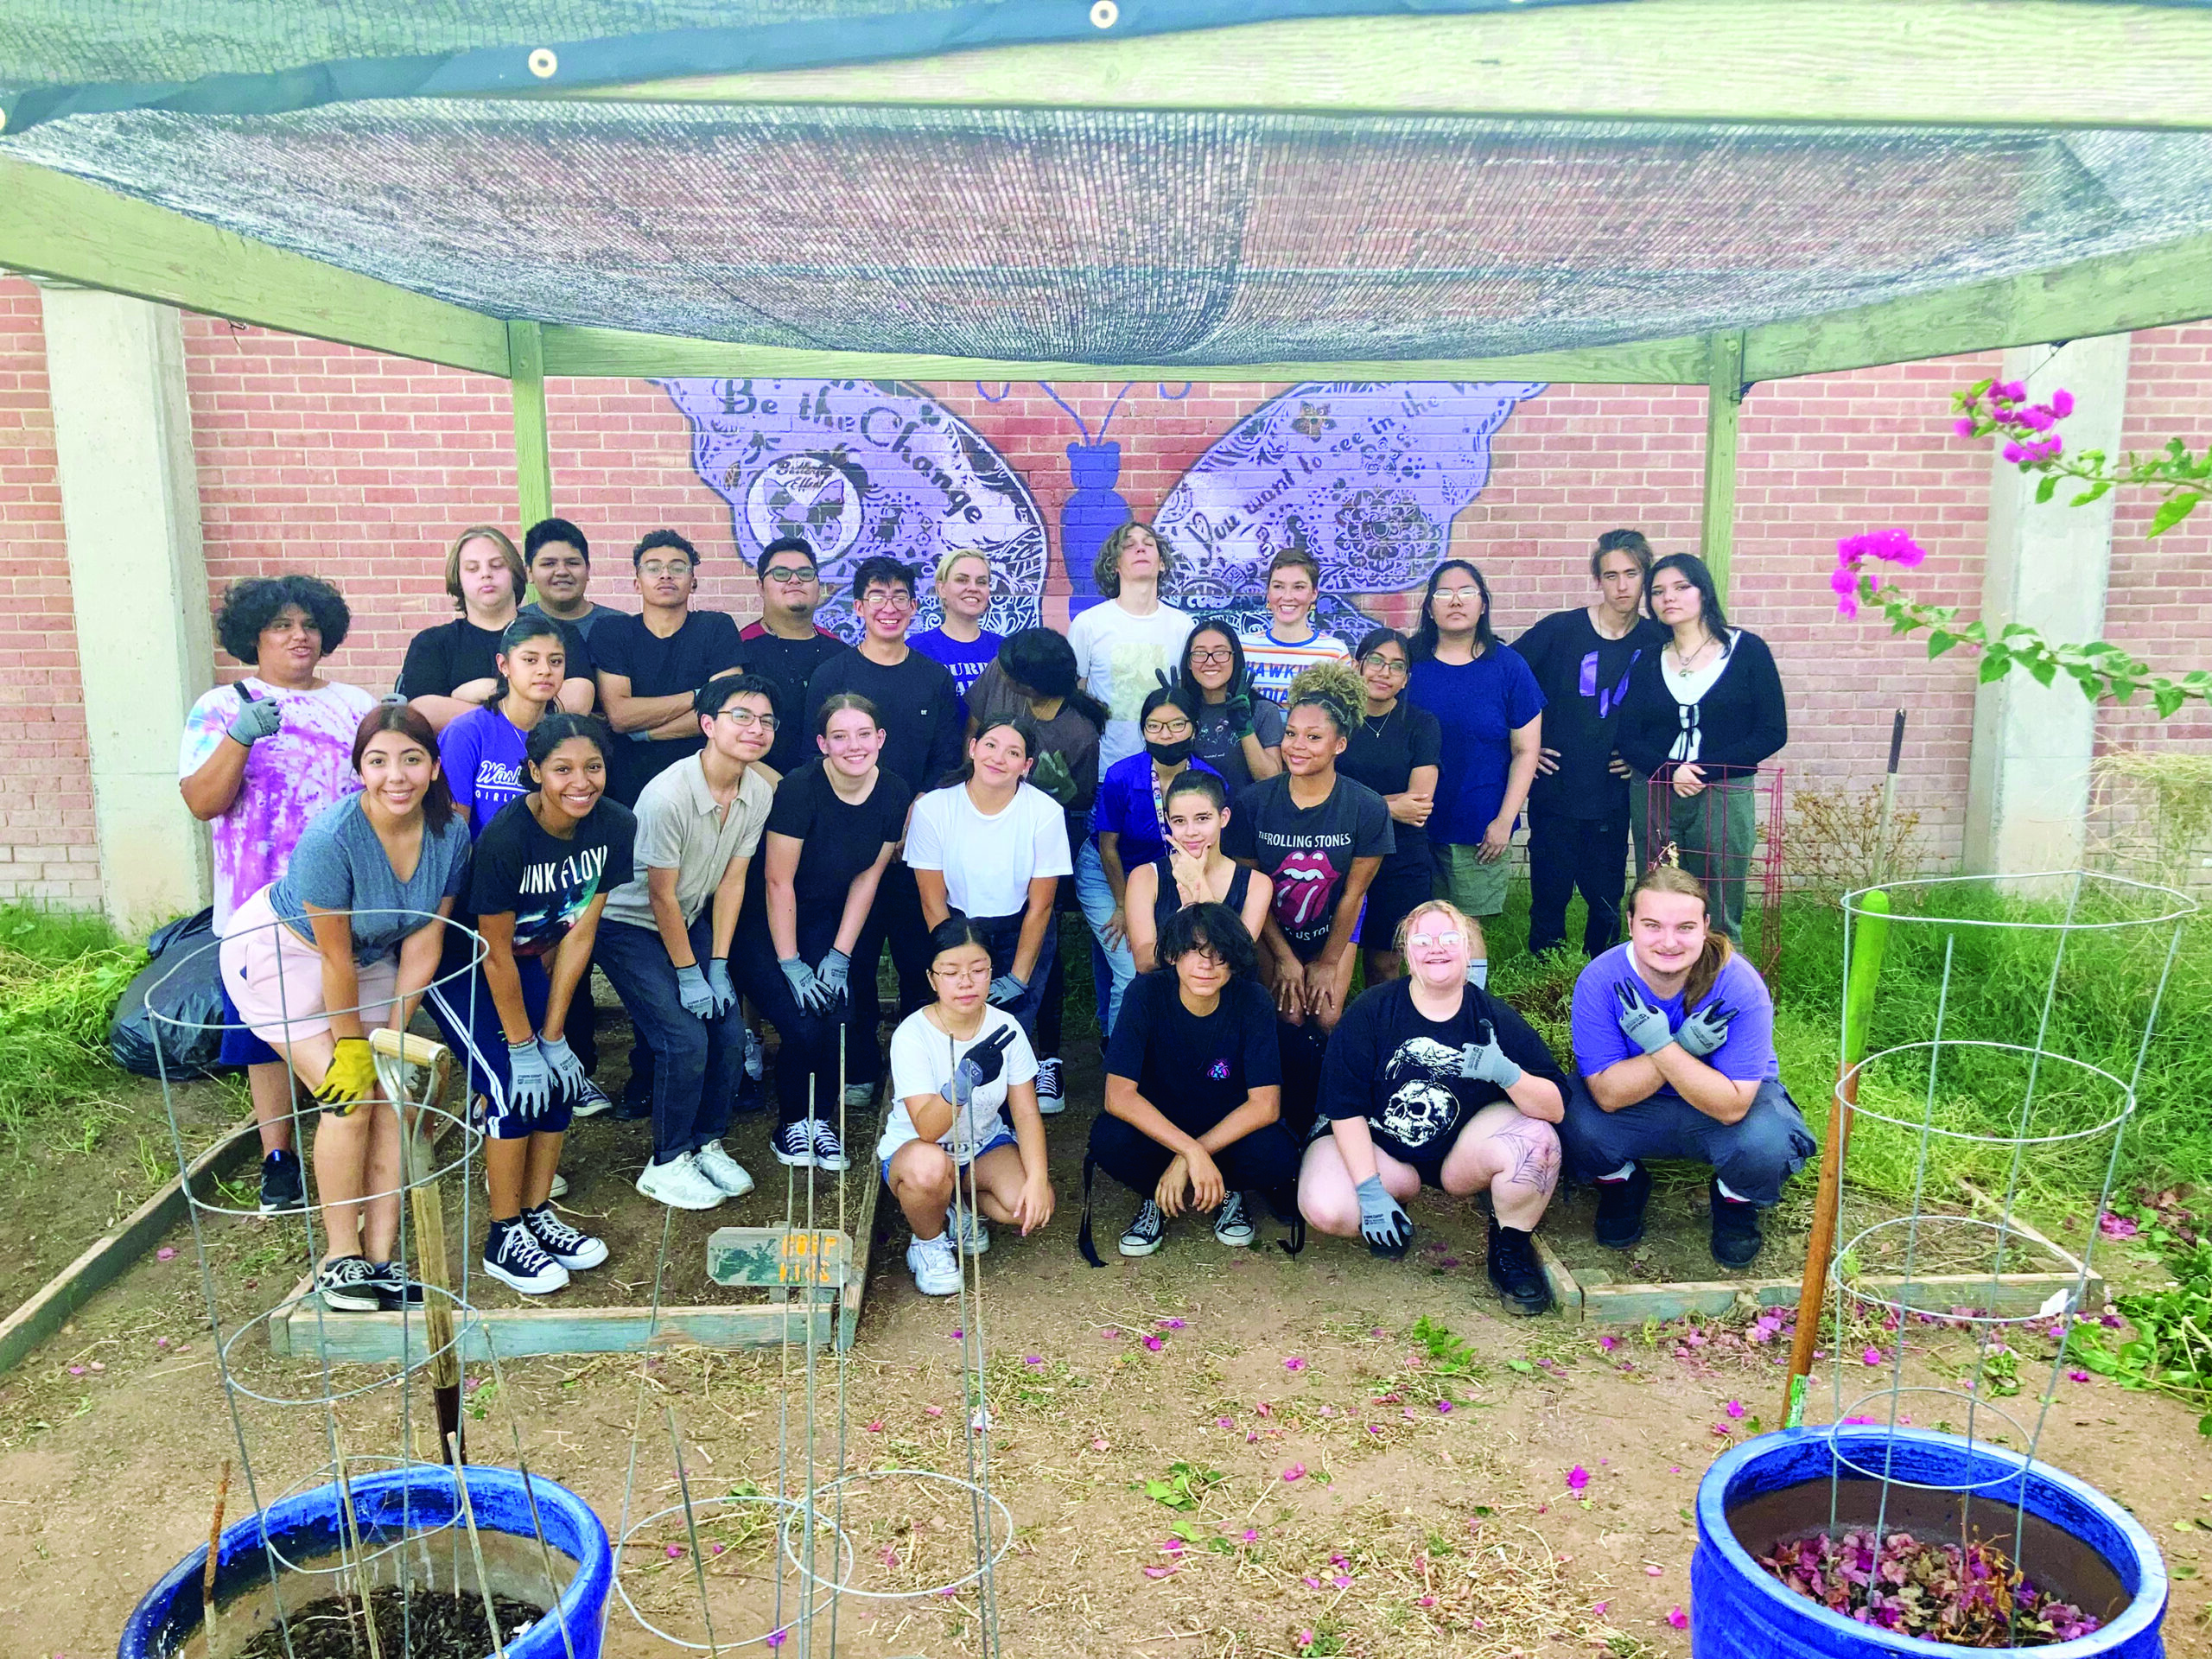 School, community give garden new life